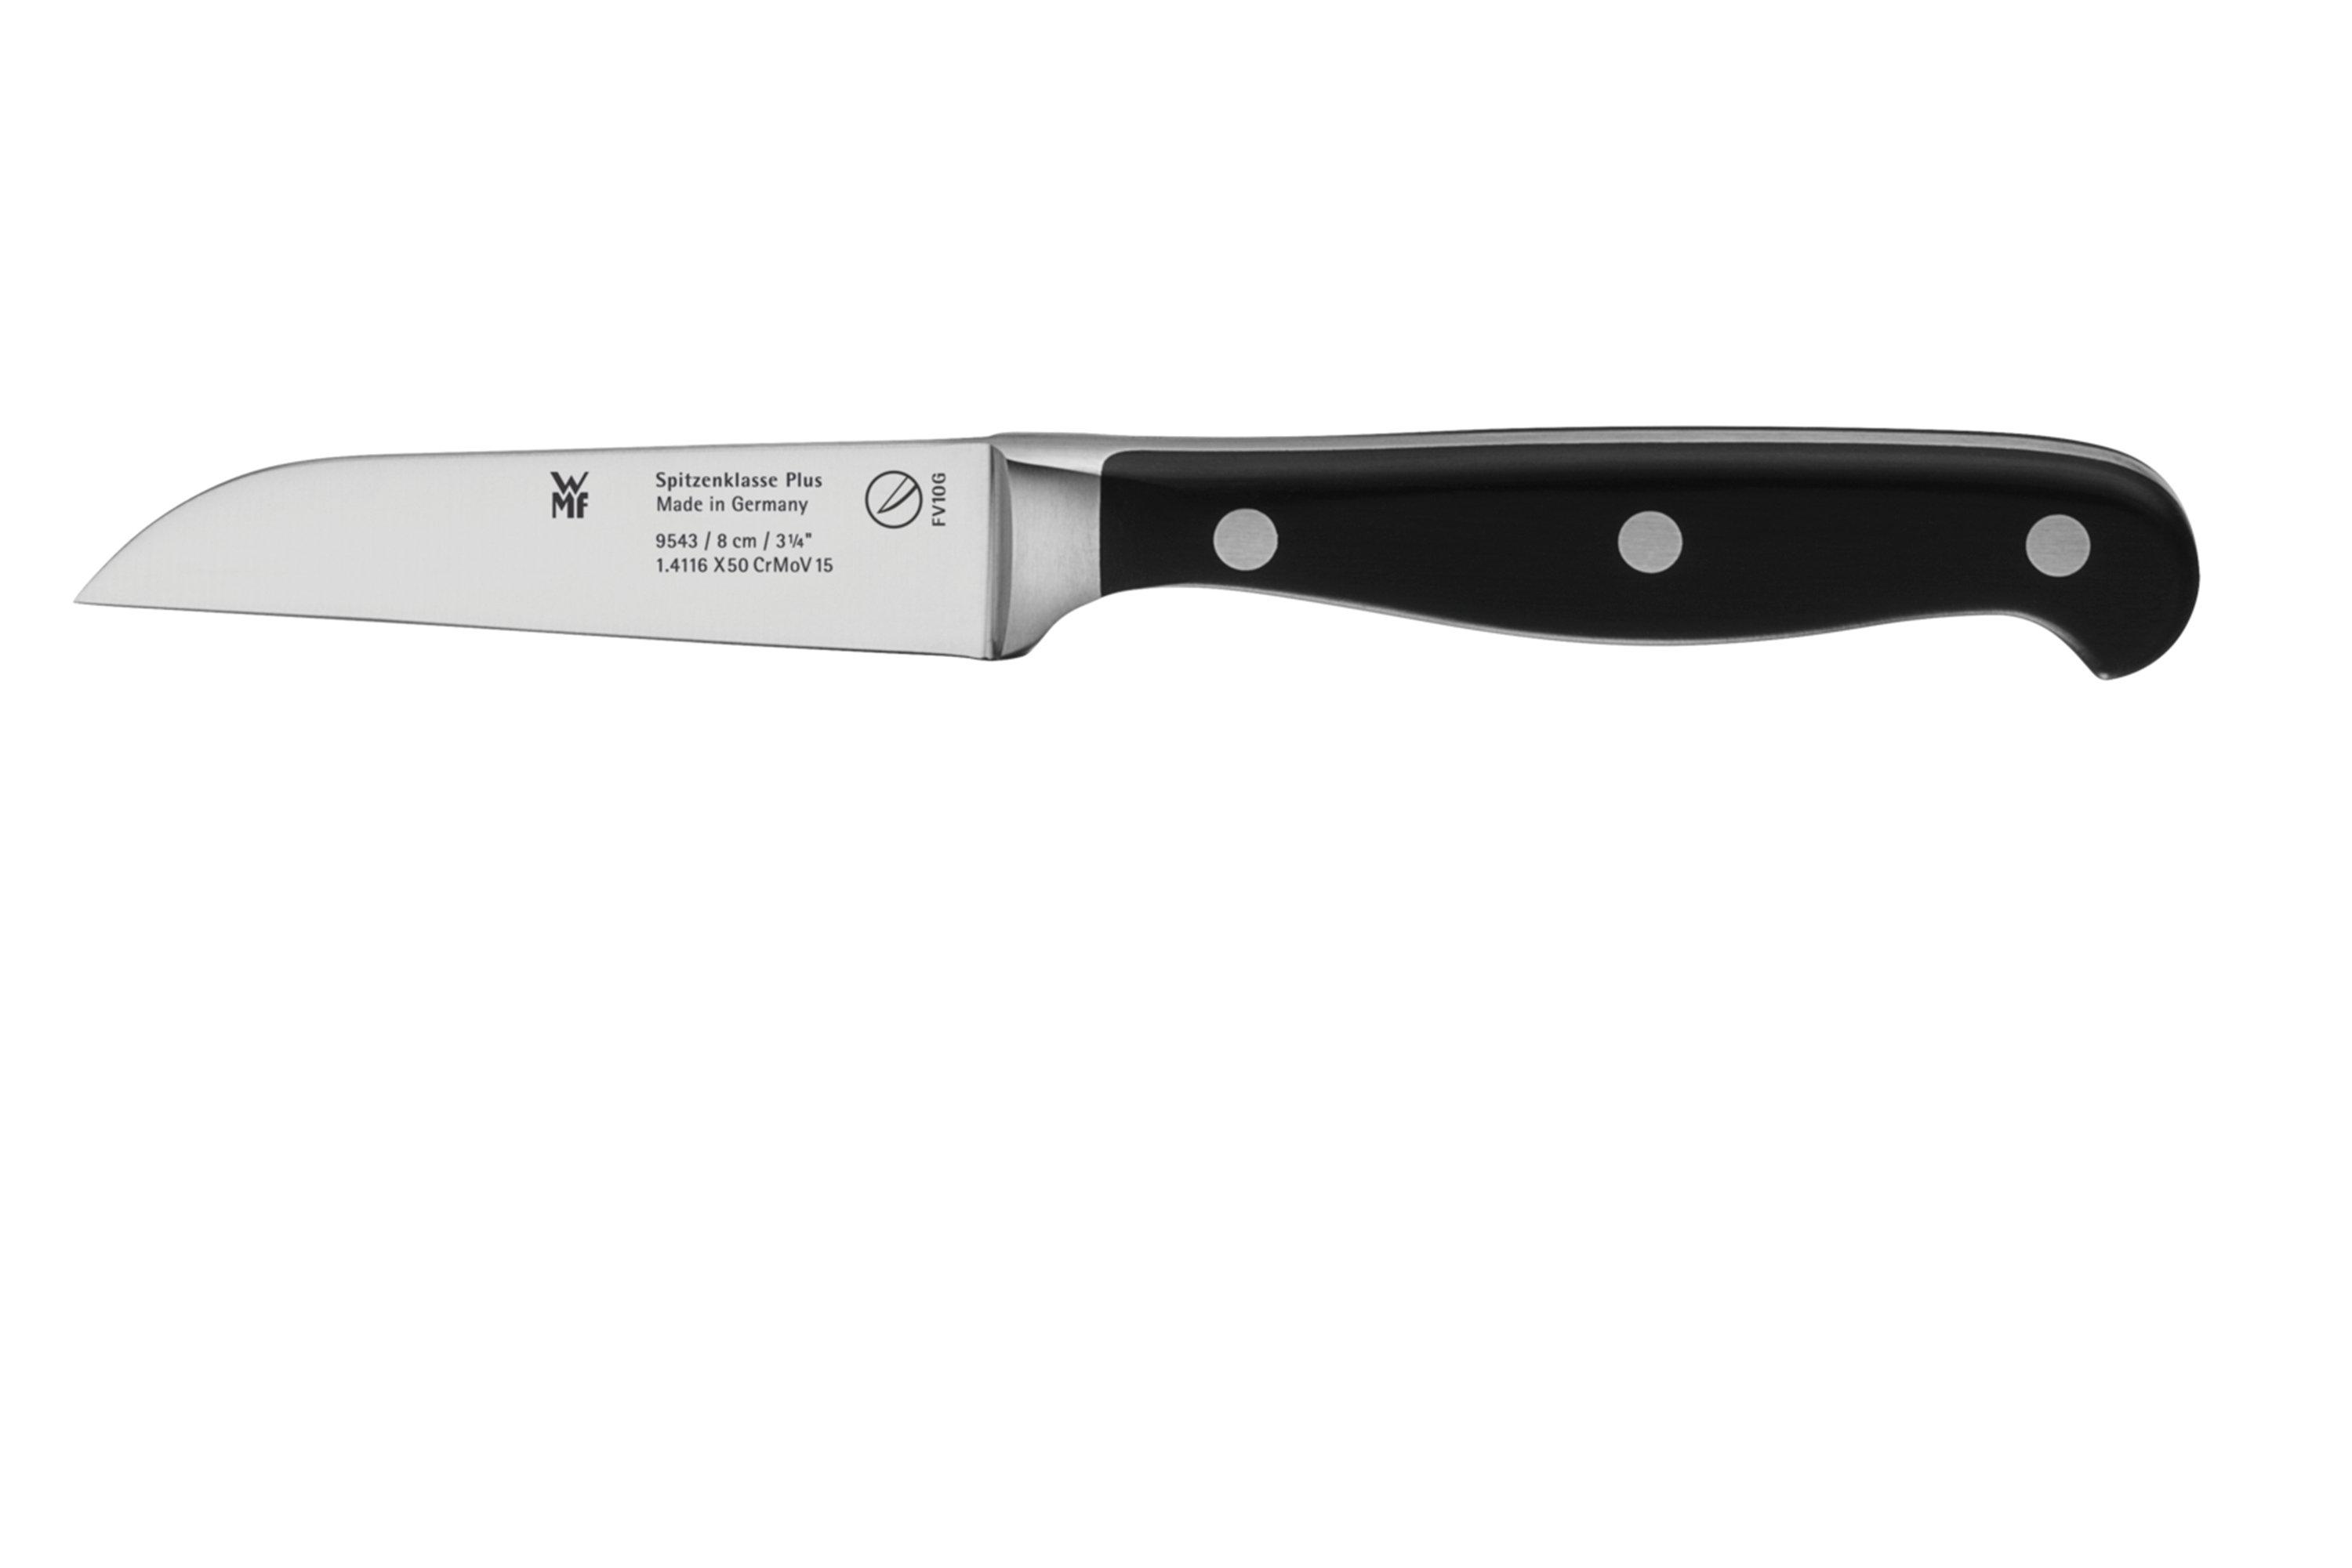 WMF Spitzenklasse 1894919992, | at shopping Plus Advantageously 3-piece knife set